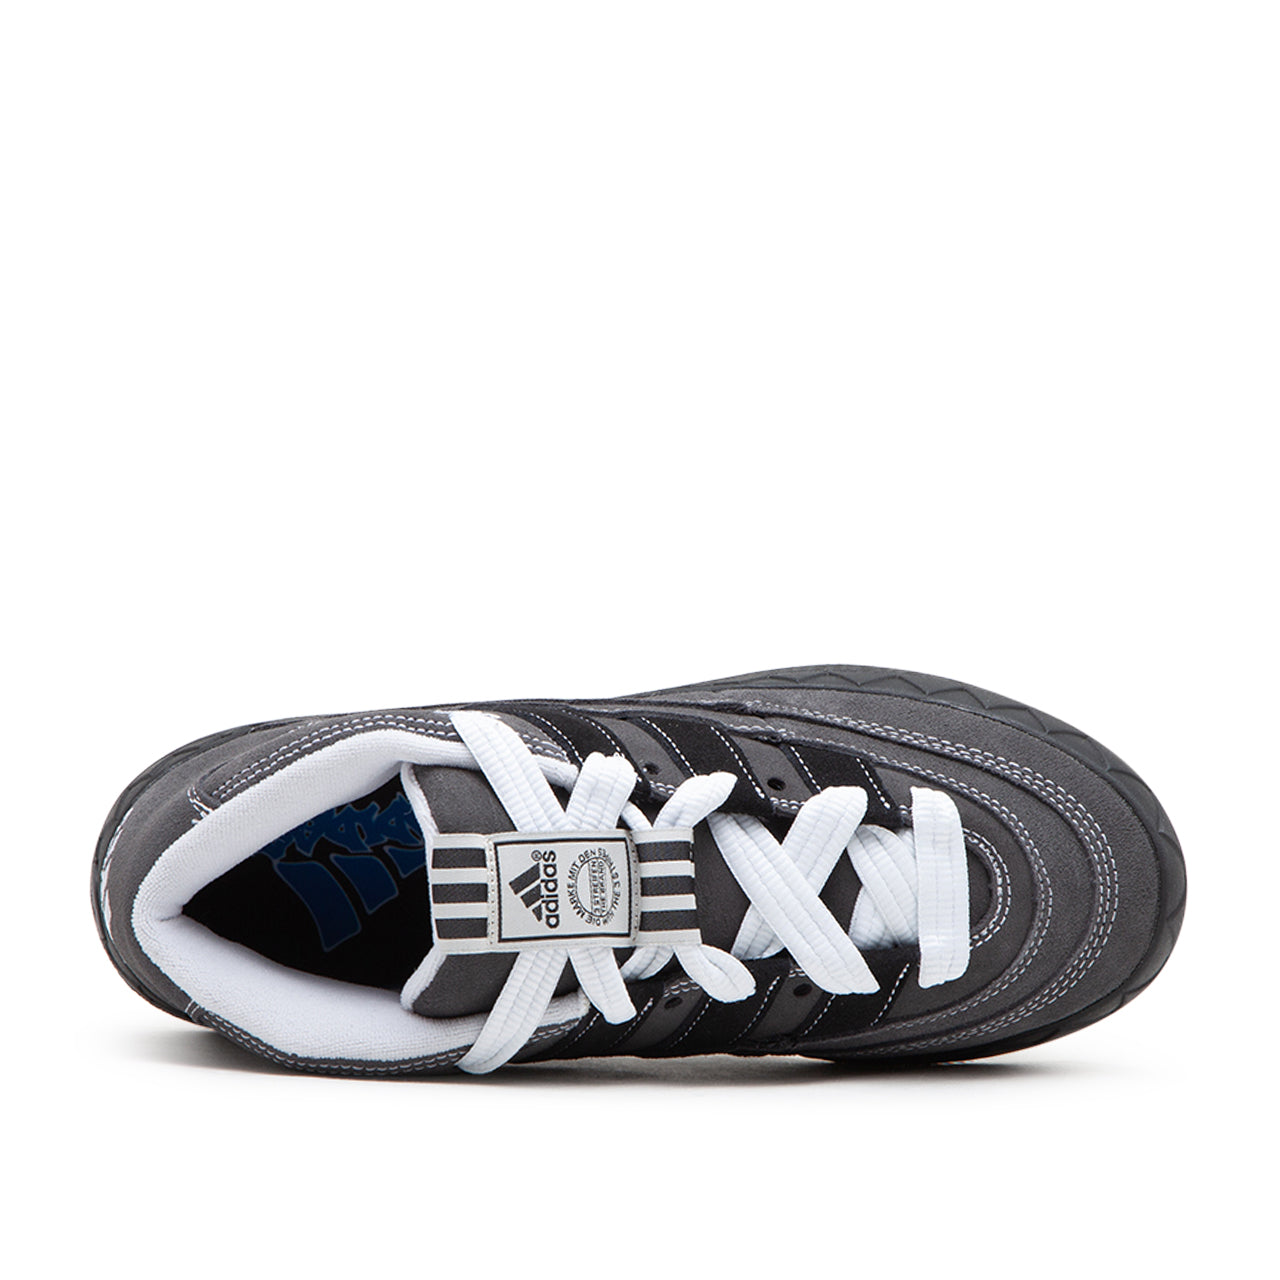 Shoes - adidas Adimatic Mid YNuK Shoes - Grey